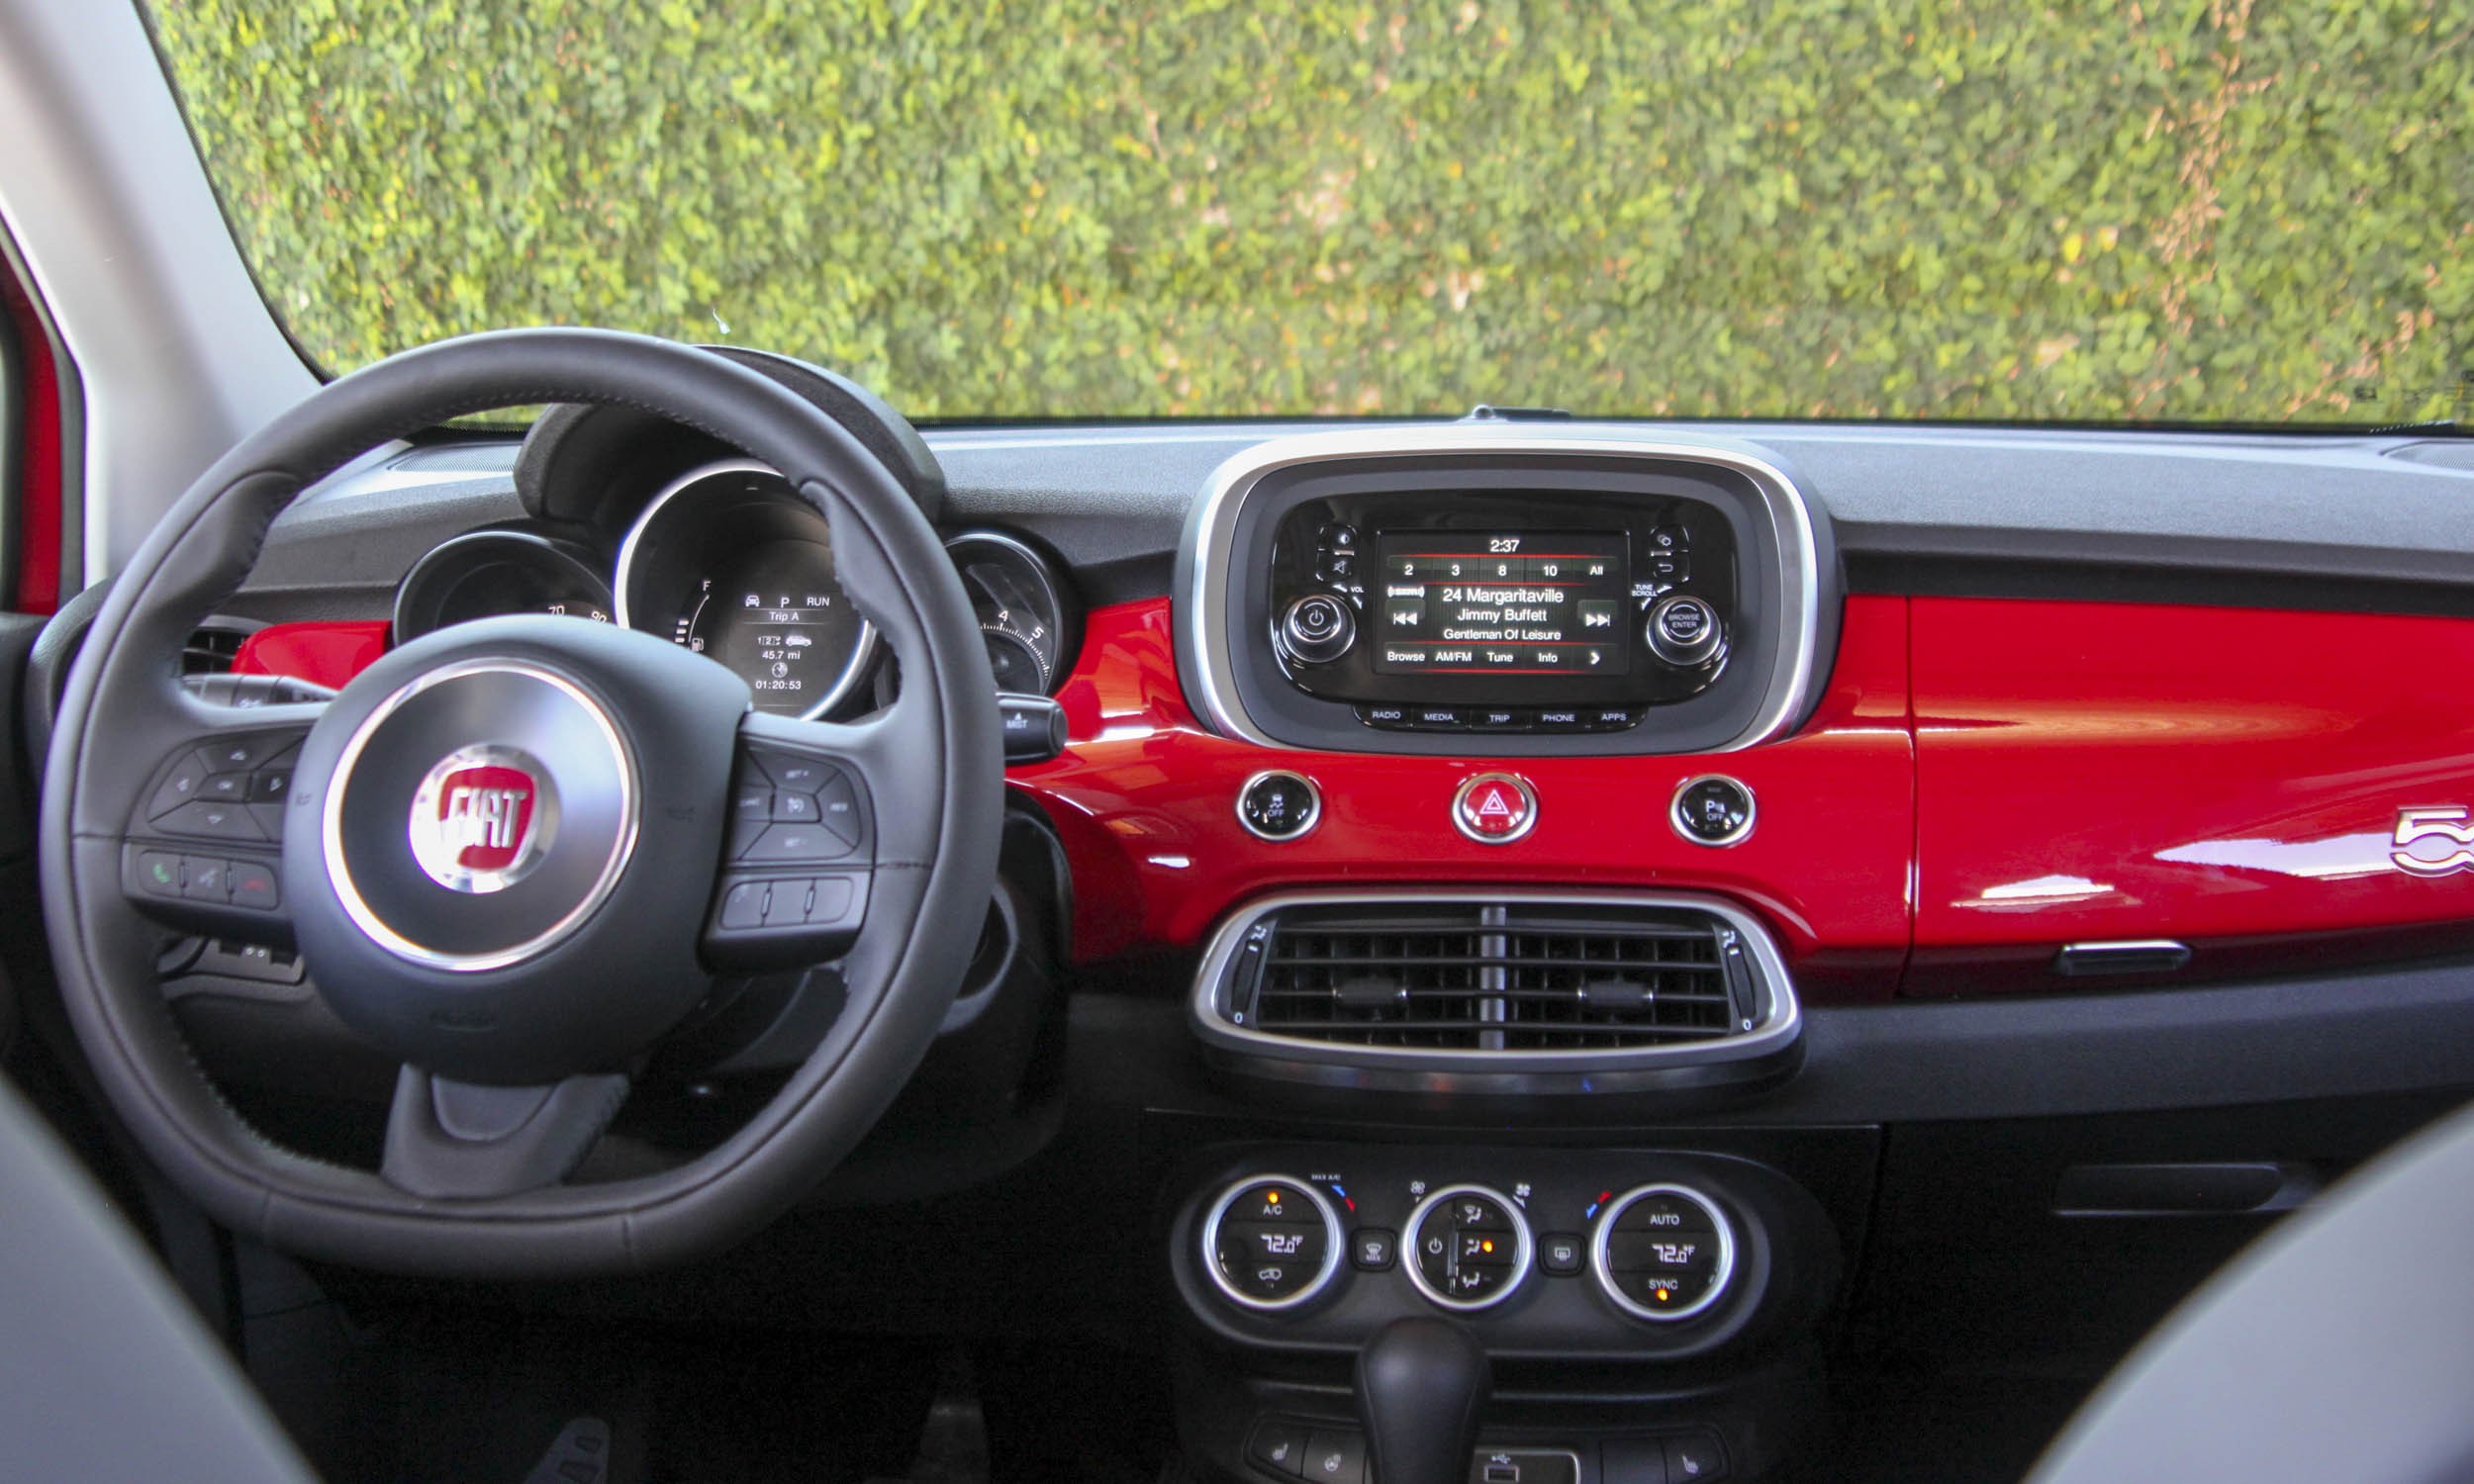 General 2500x1500 car steering wheel FIAT car interior vehicle Fiat 500X speedometer italian cars Stellantis